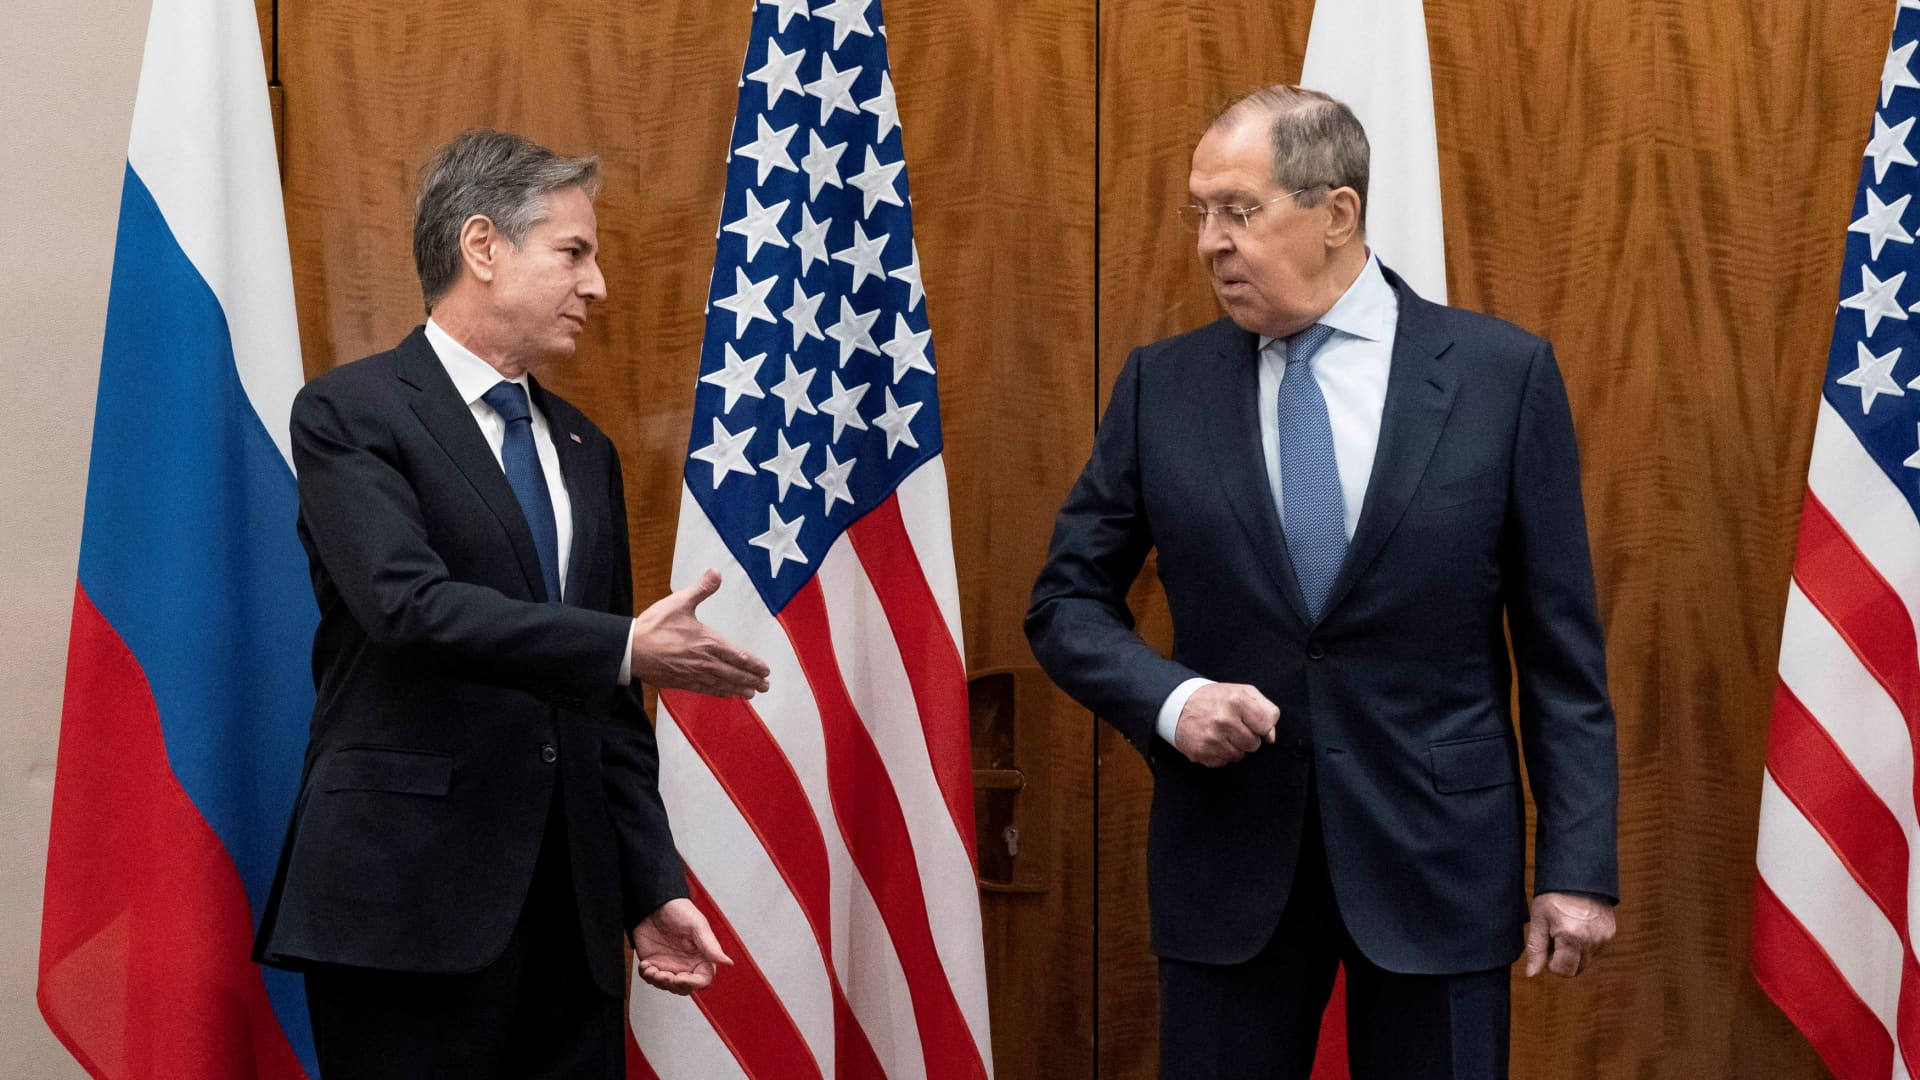 U.S. Secretary of State Antony Blinken greets Russian Foreign Minister Sergei Lavrov before their meeting, in Geneva, Switzerland, January 21, 2022.